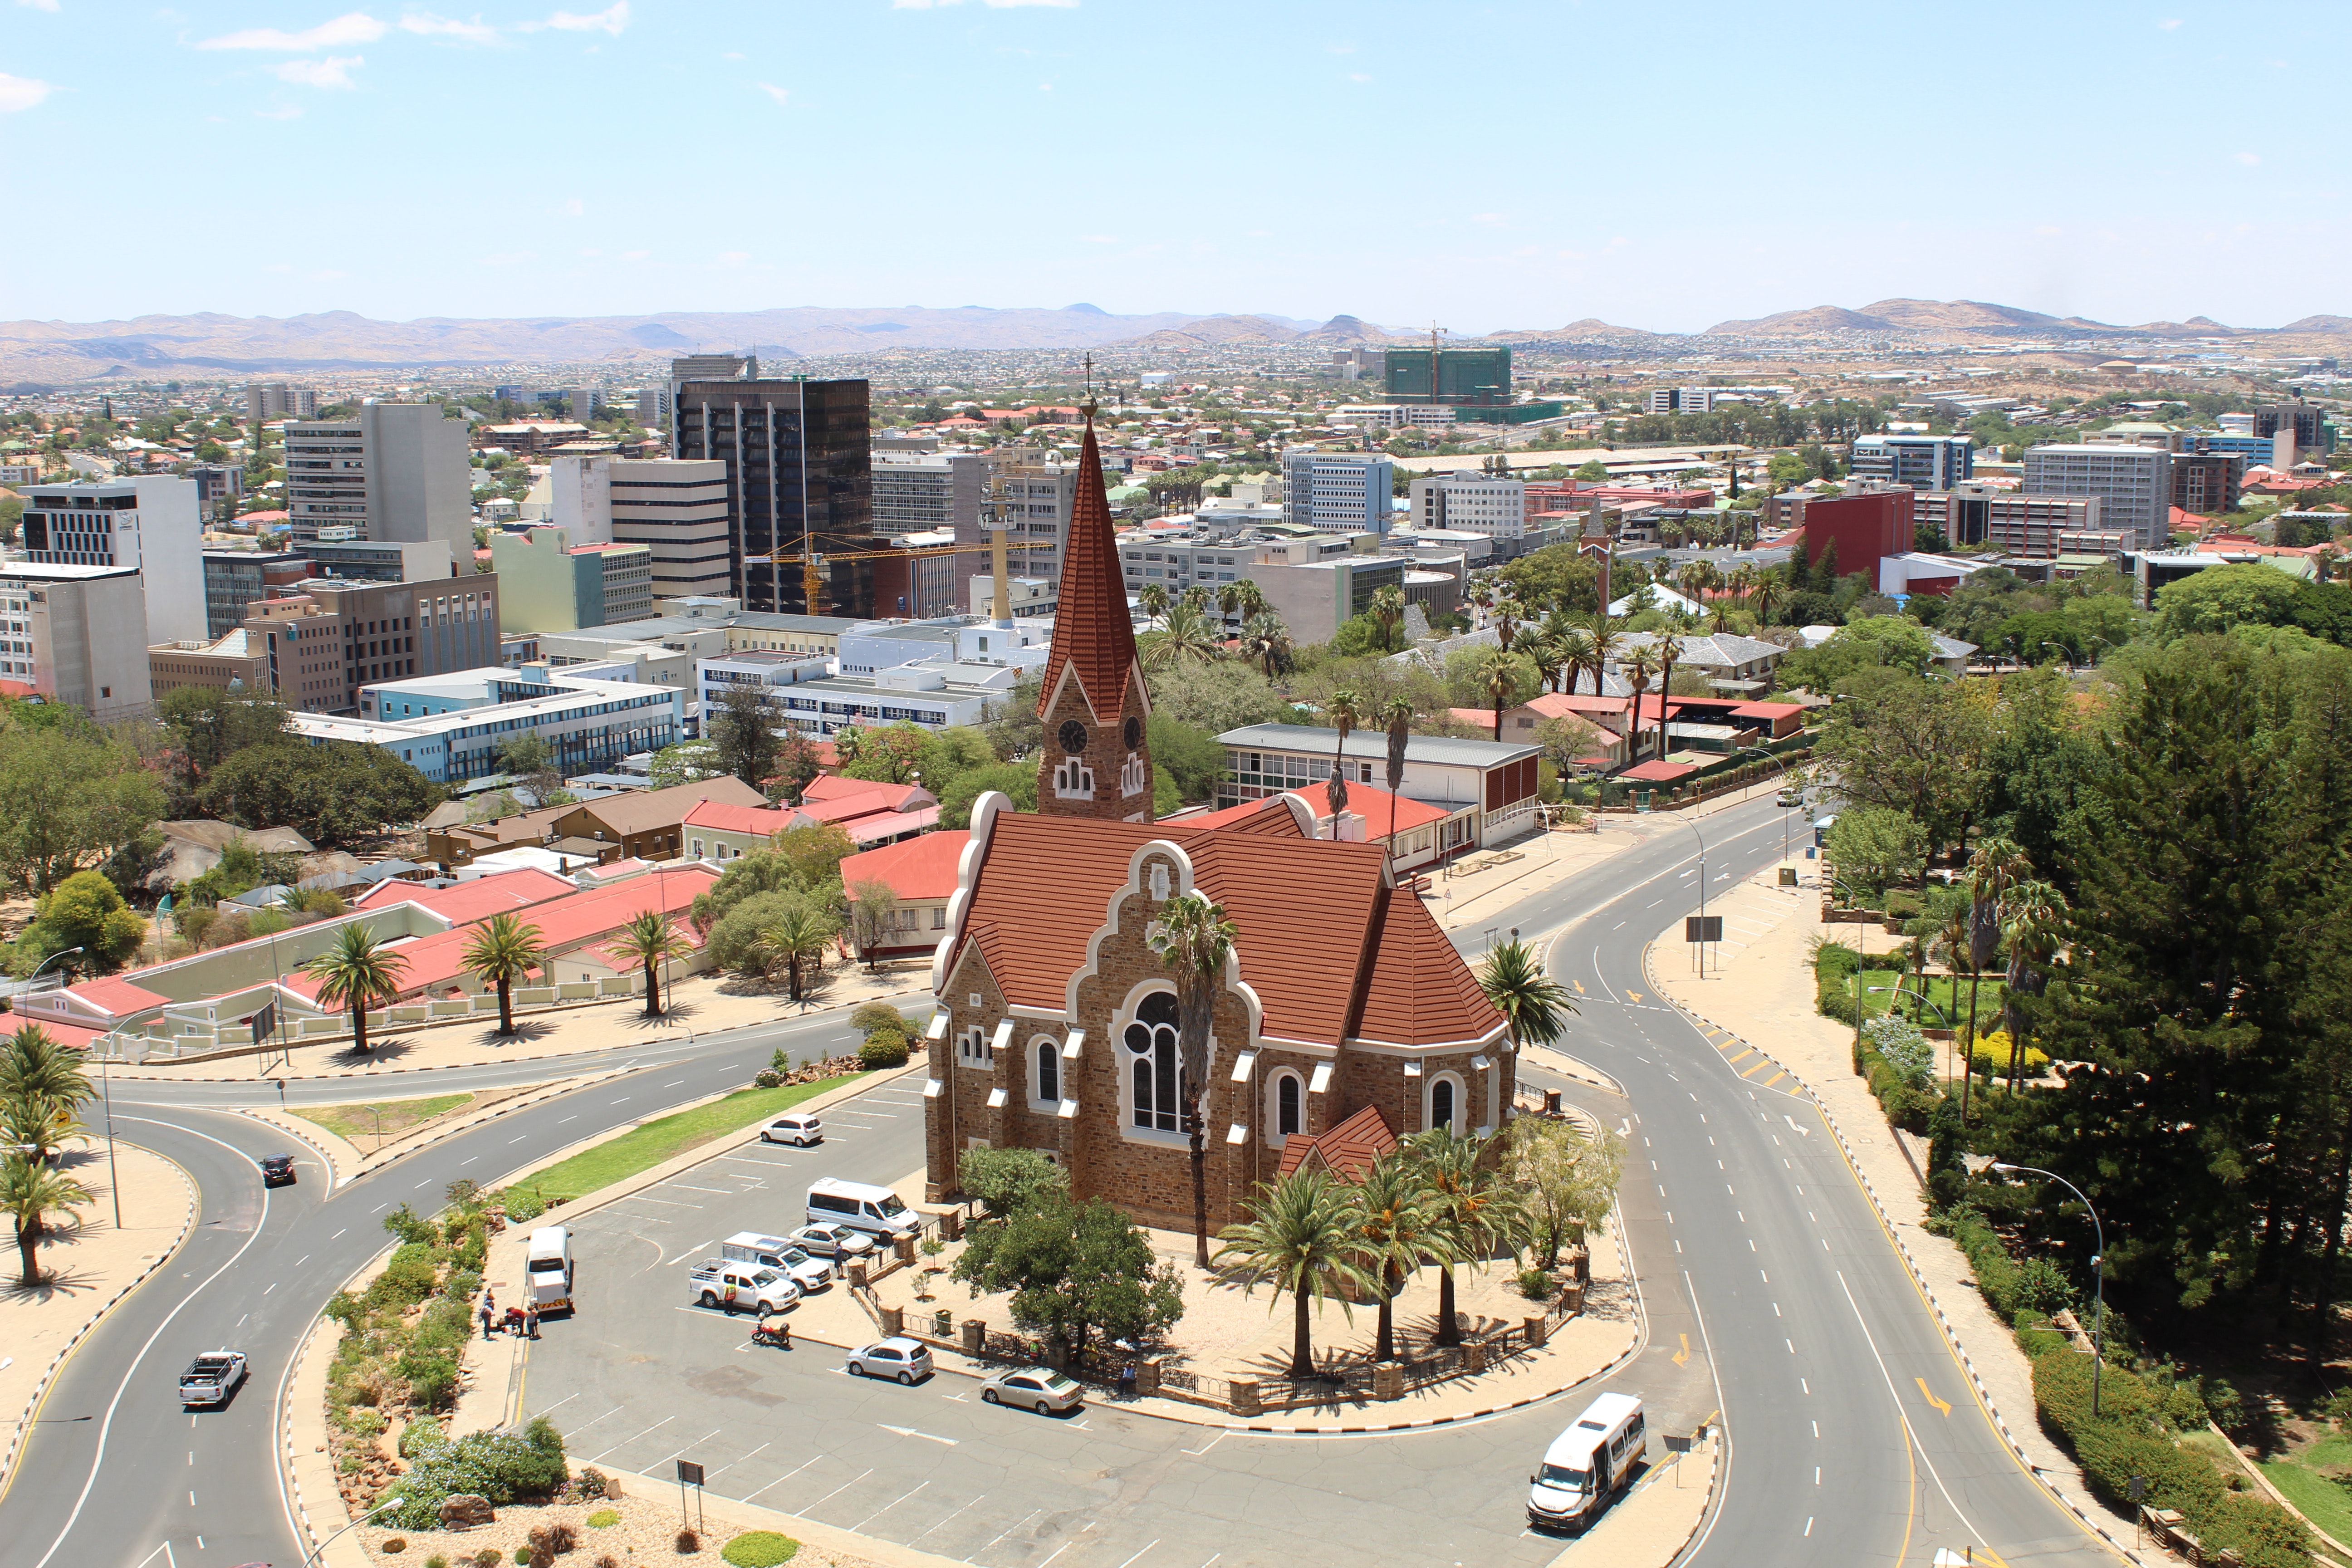 Windhoek, the capital of Namibia